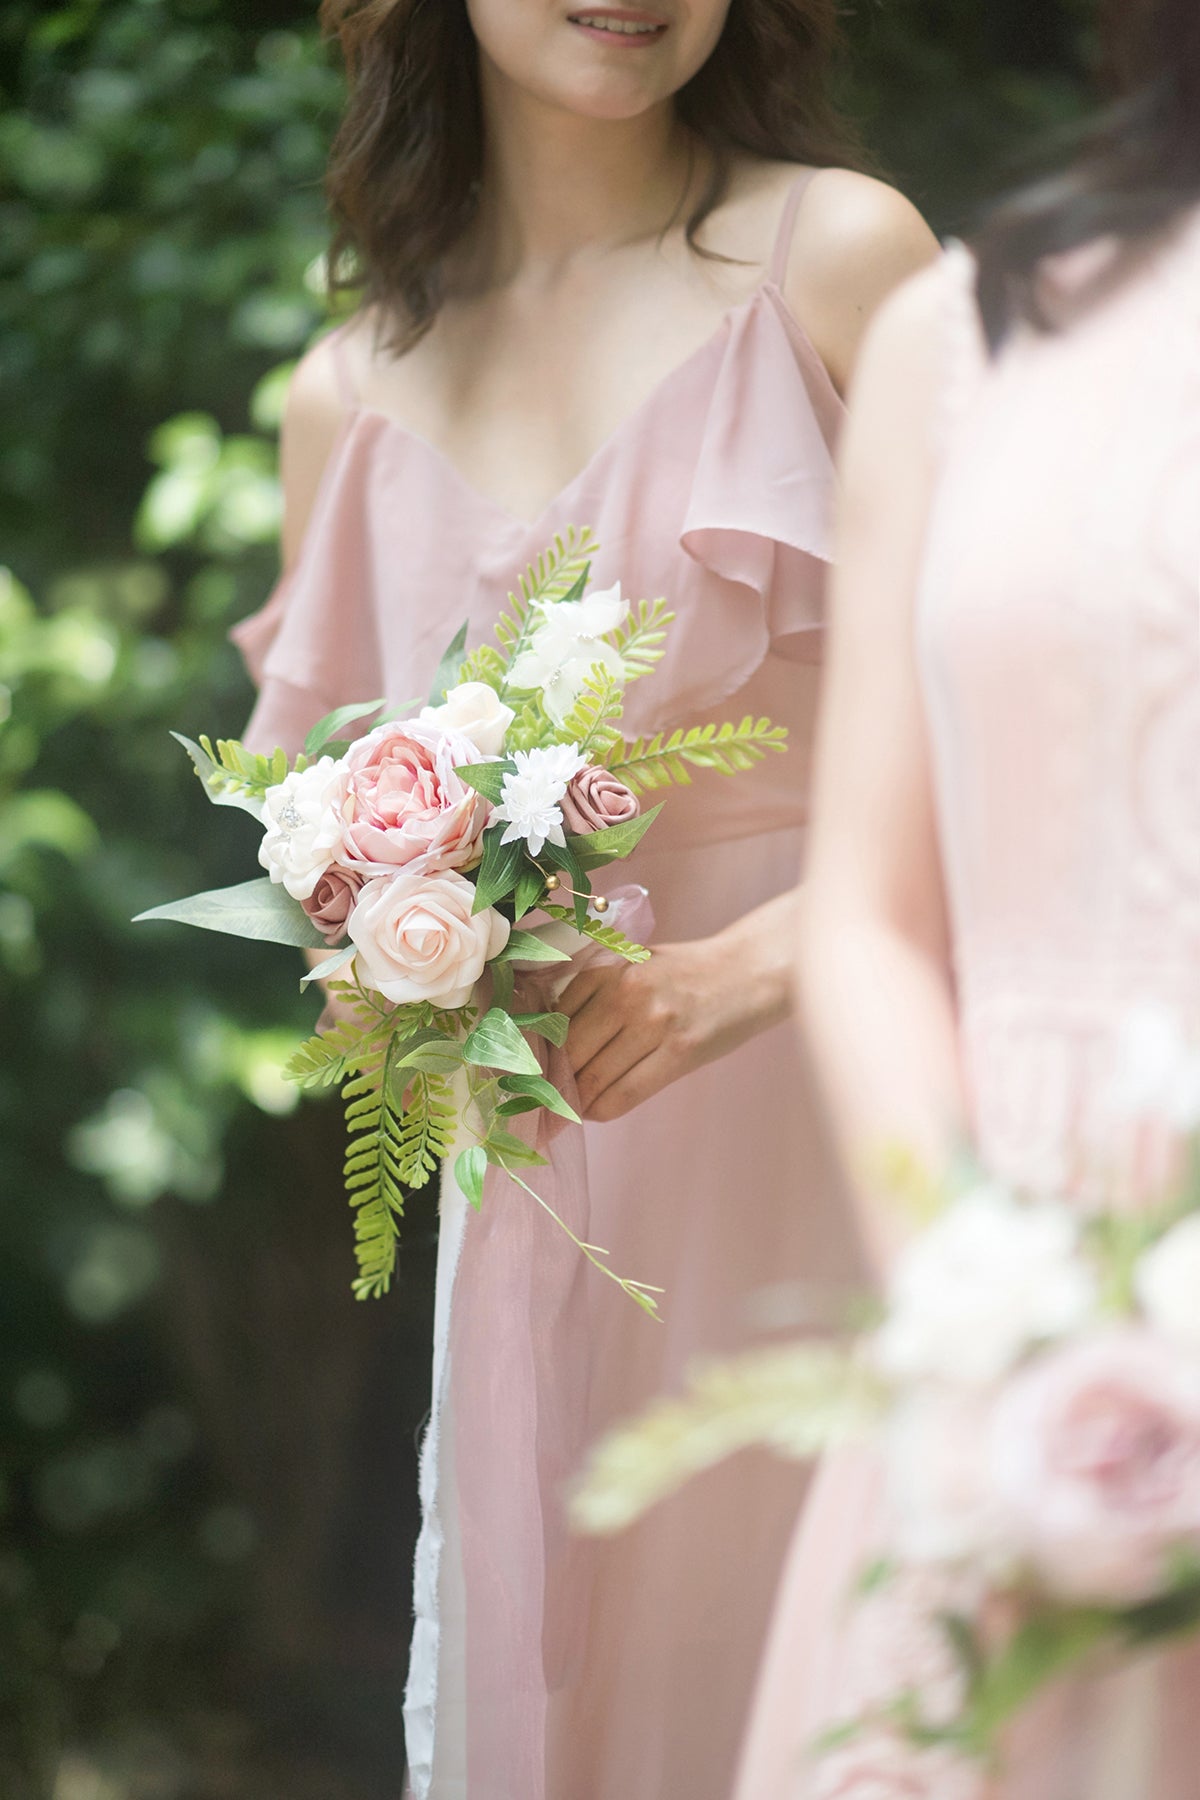 Wedding flowers Ivory rose bouquets wrist corsage bride bridesmaids prom  posy